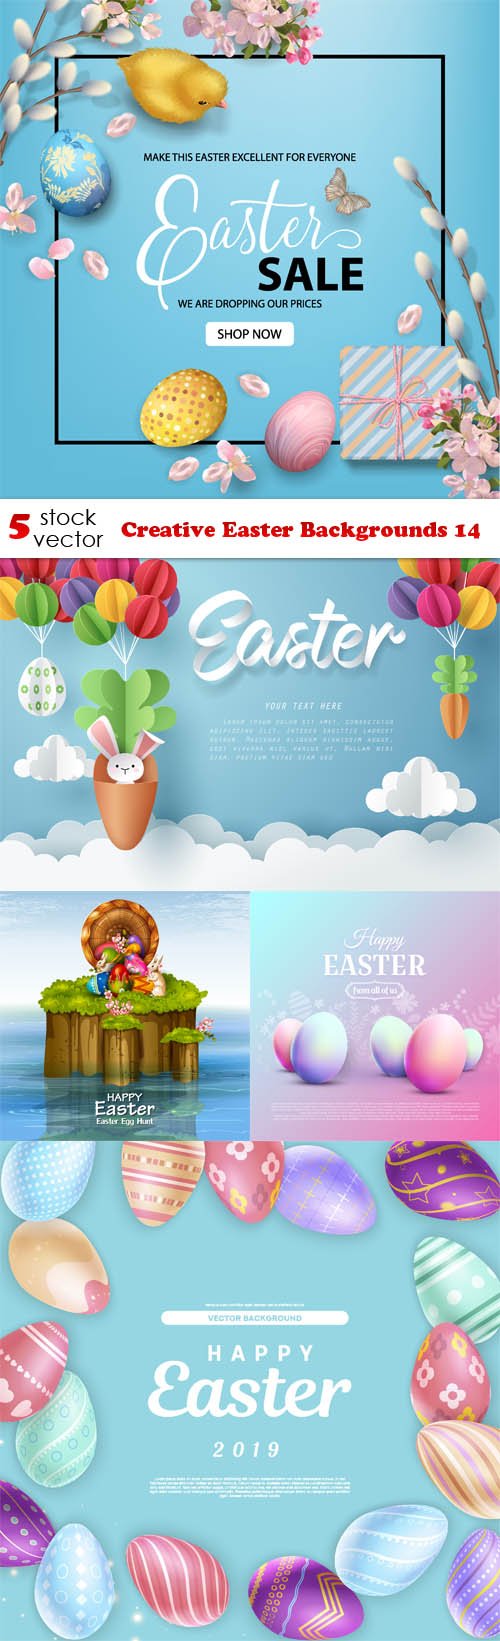 Vectors - Creative Easter Backgrounds 14